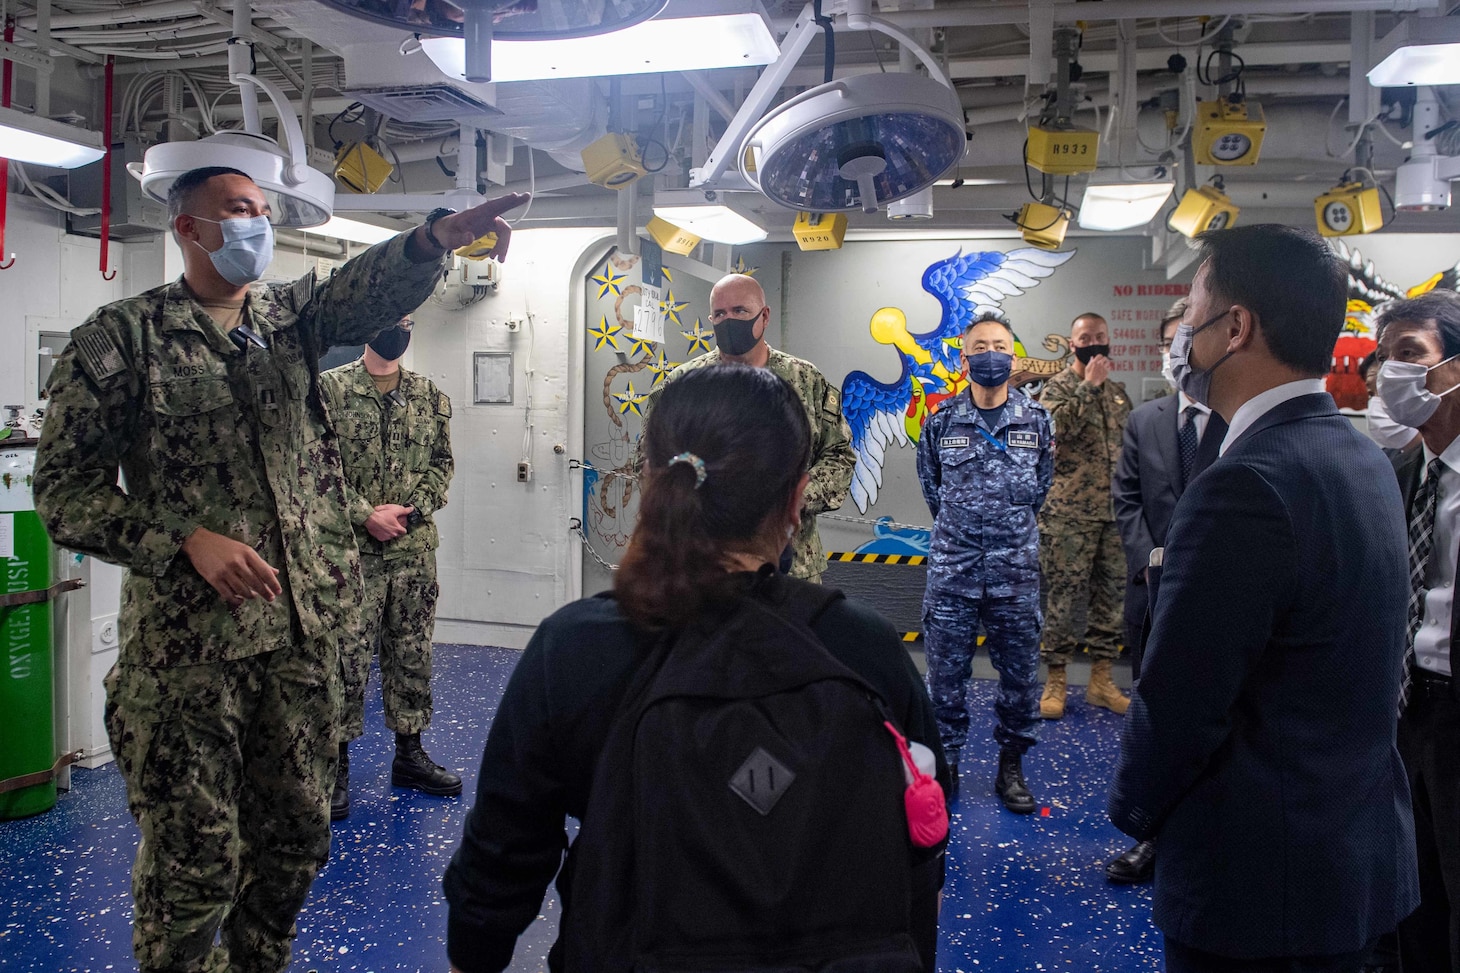 USS America first LHA to visit MCAS Iwakuni > Commander, U.S. 7th